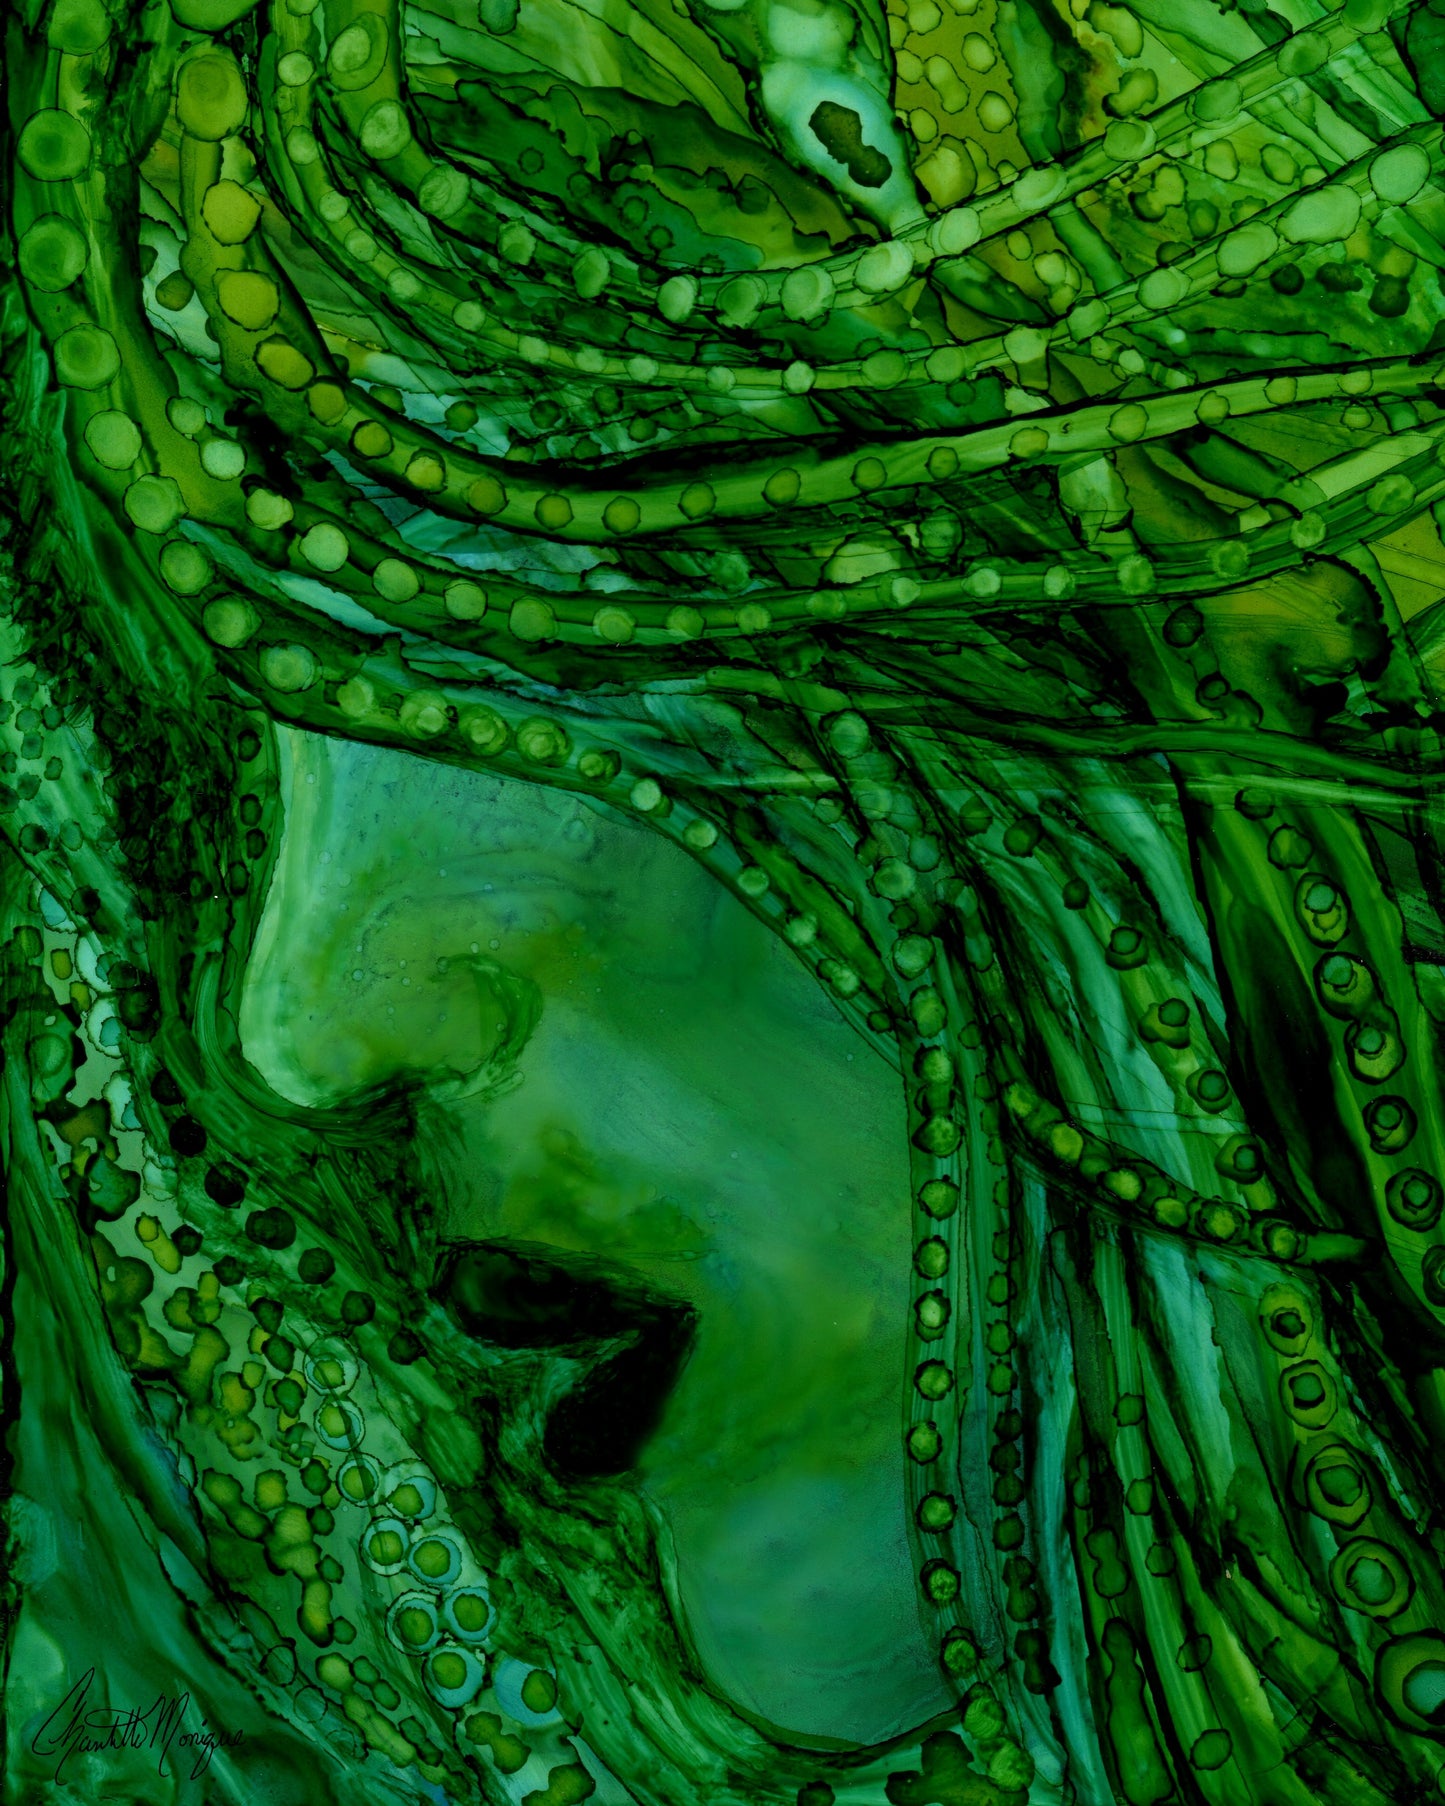 Terra Verde Print 8x10